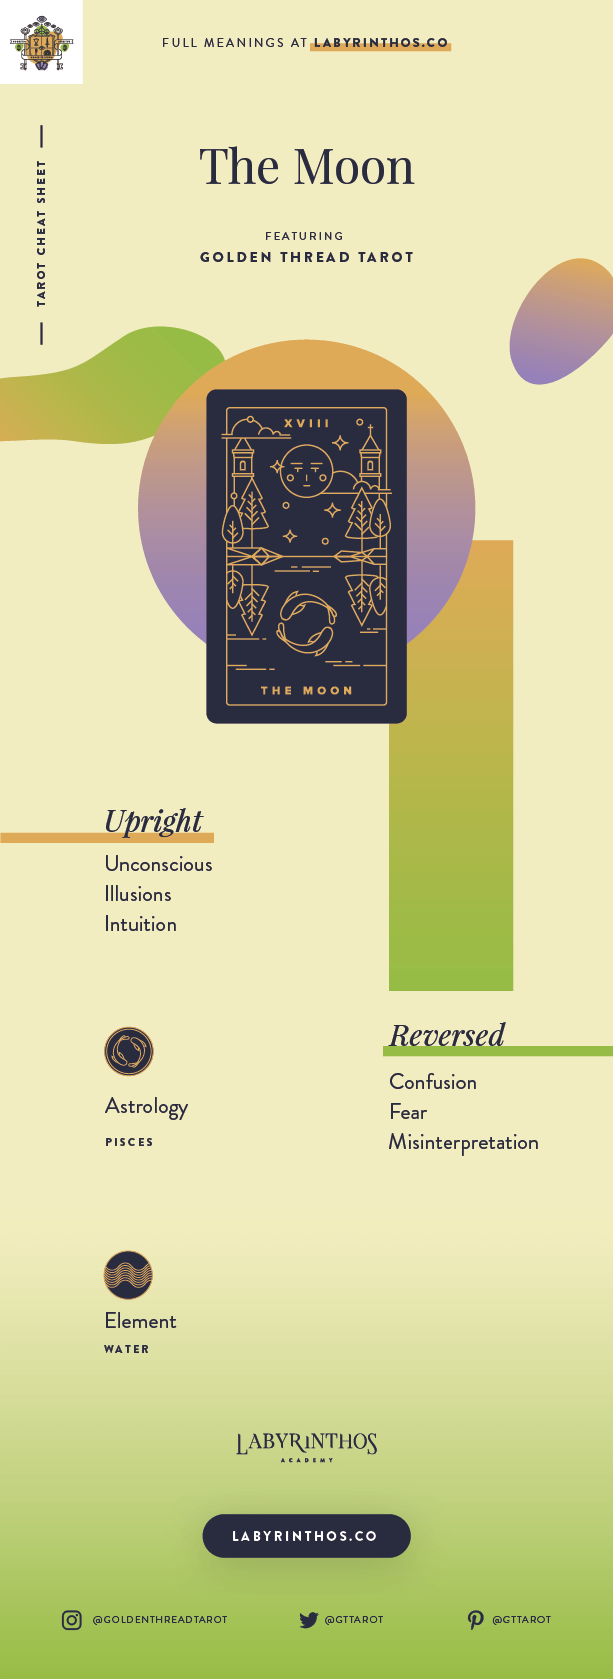 The Moon Tarot Card Meanings